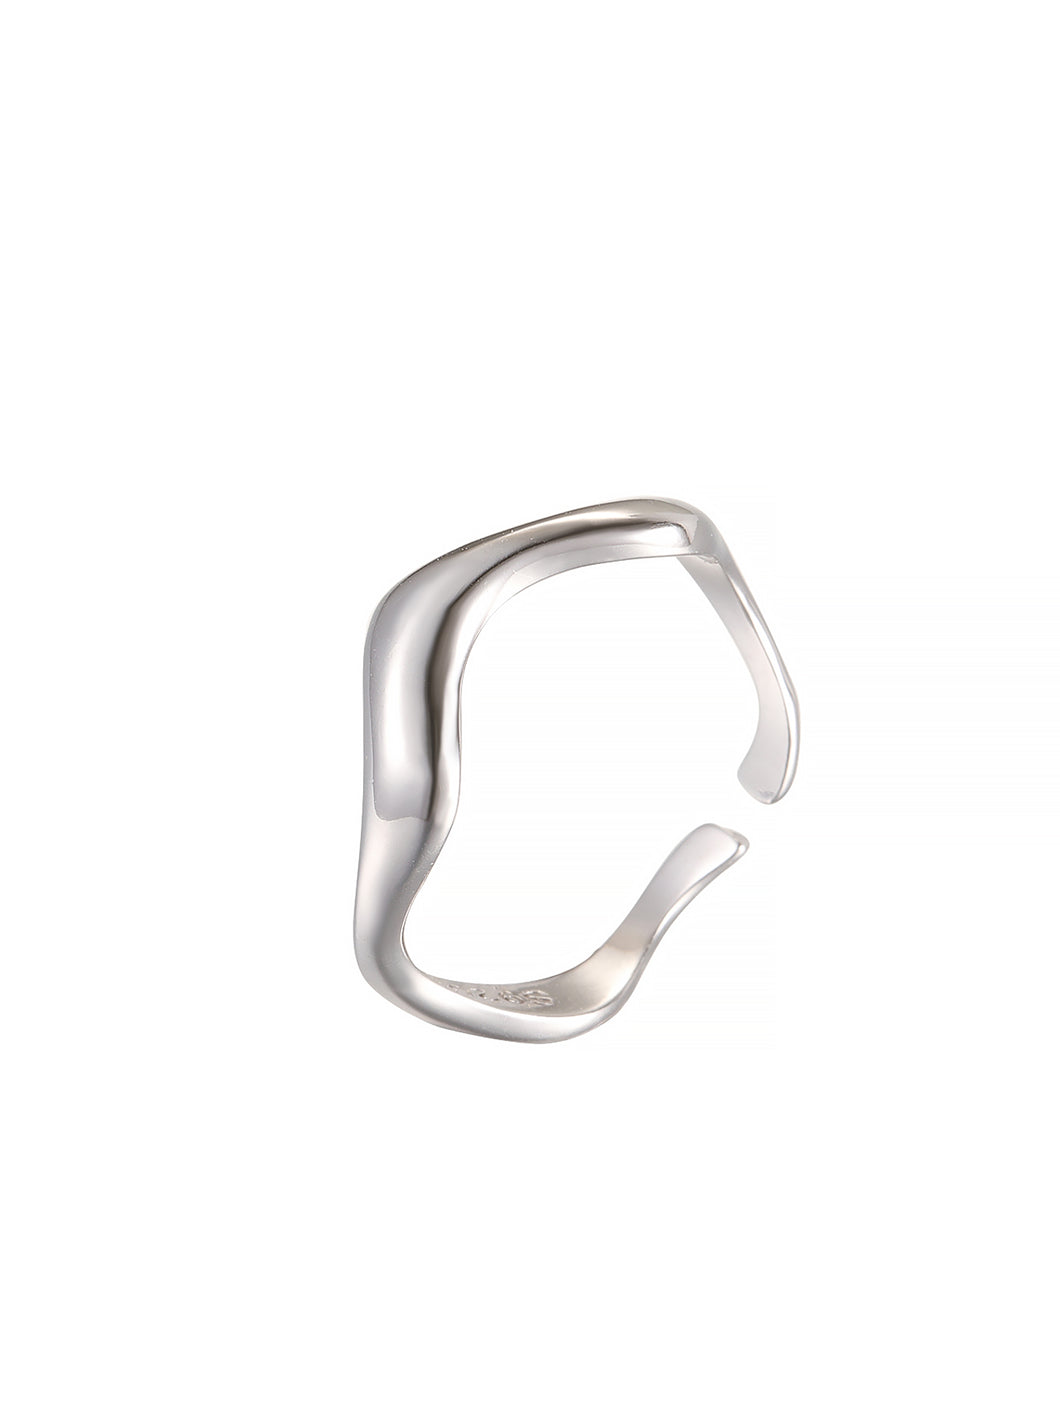 Twist Design Silver Cuff Ring